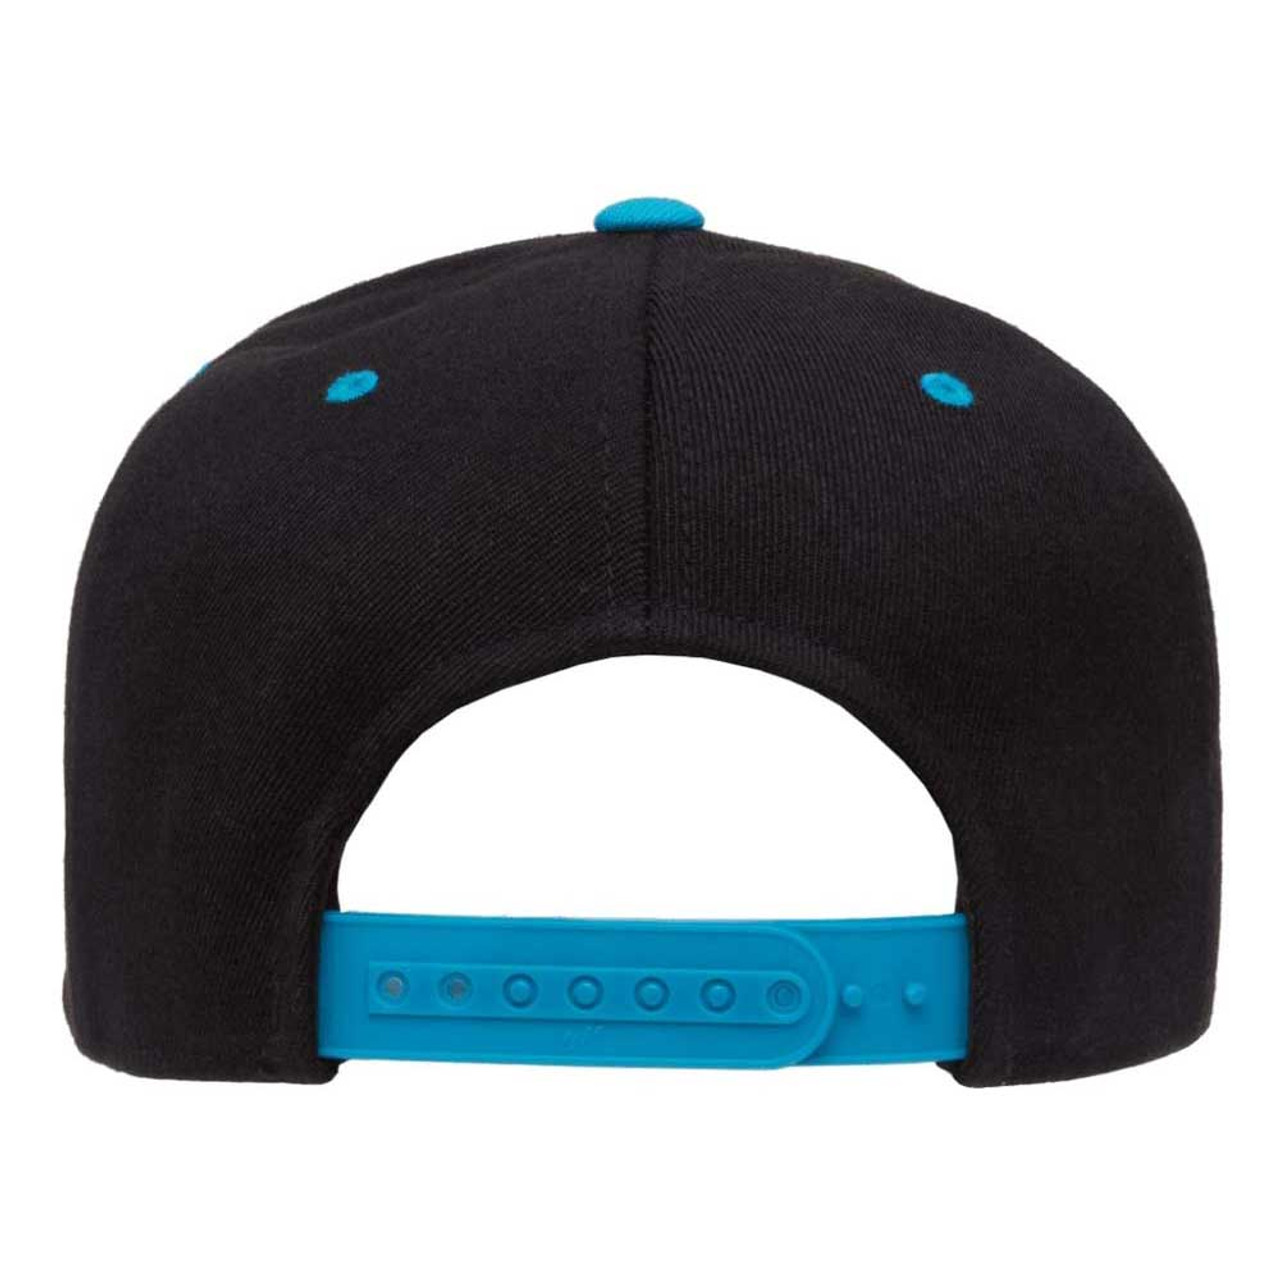 Flexfit 110® Premium Snapback Cap 2-Tone - One Dozen | The Jac Hat